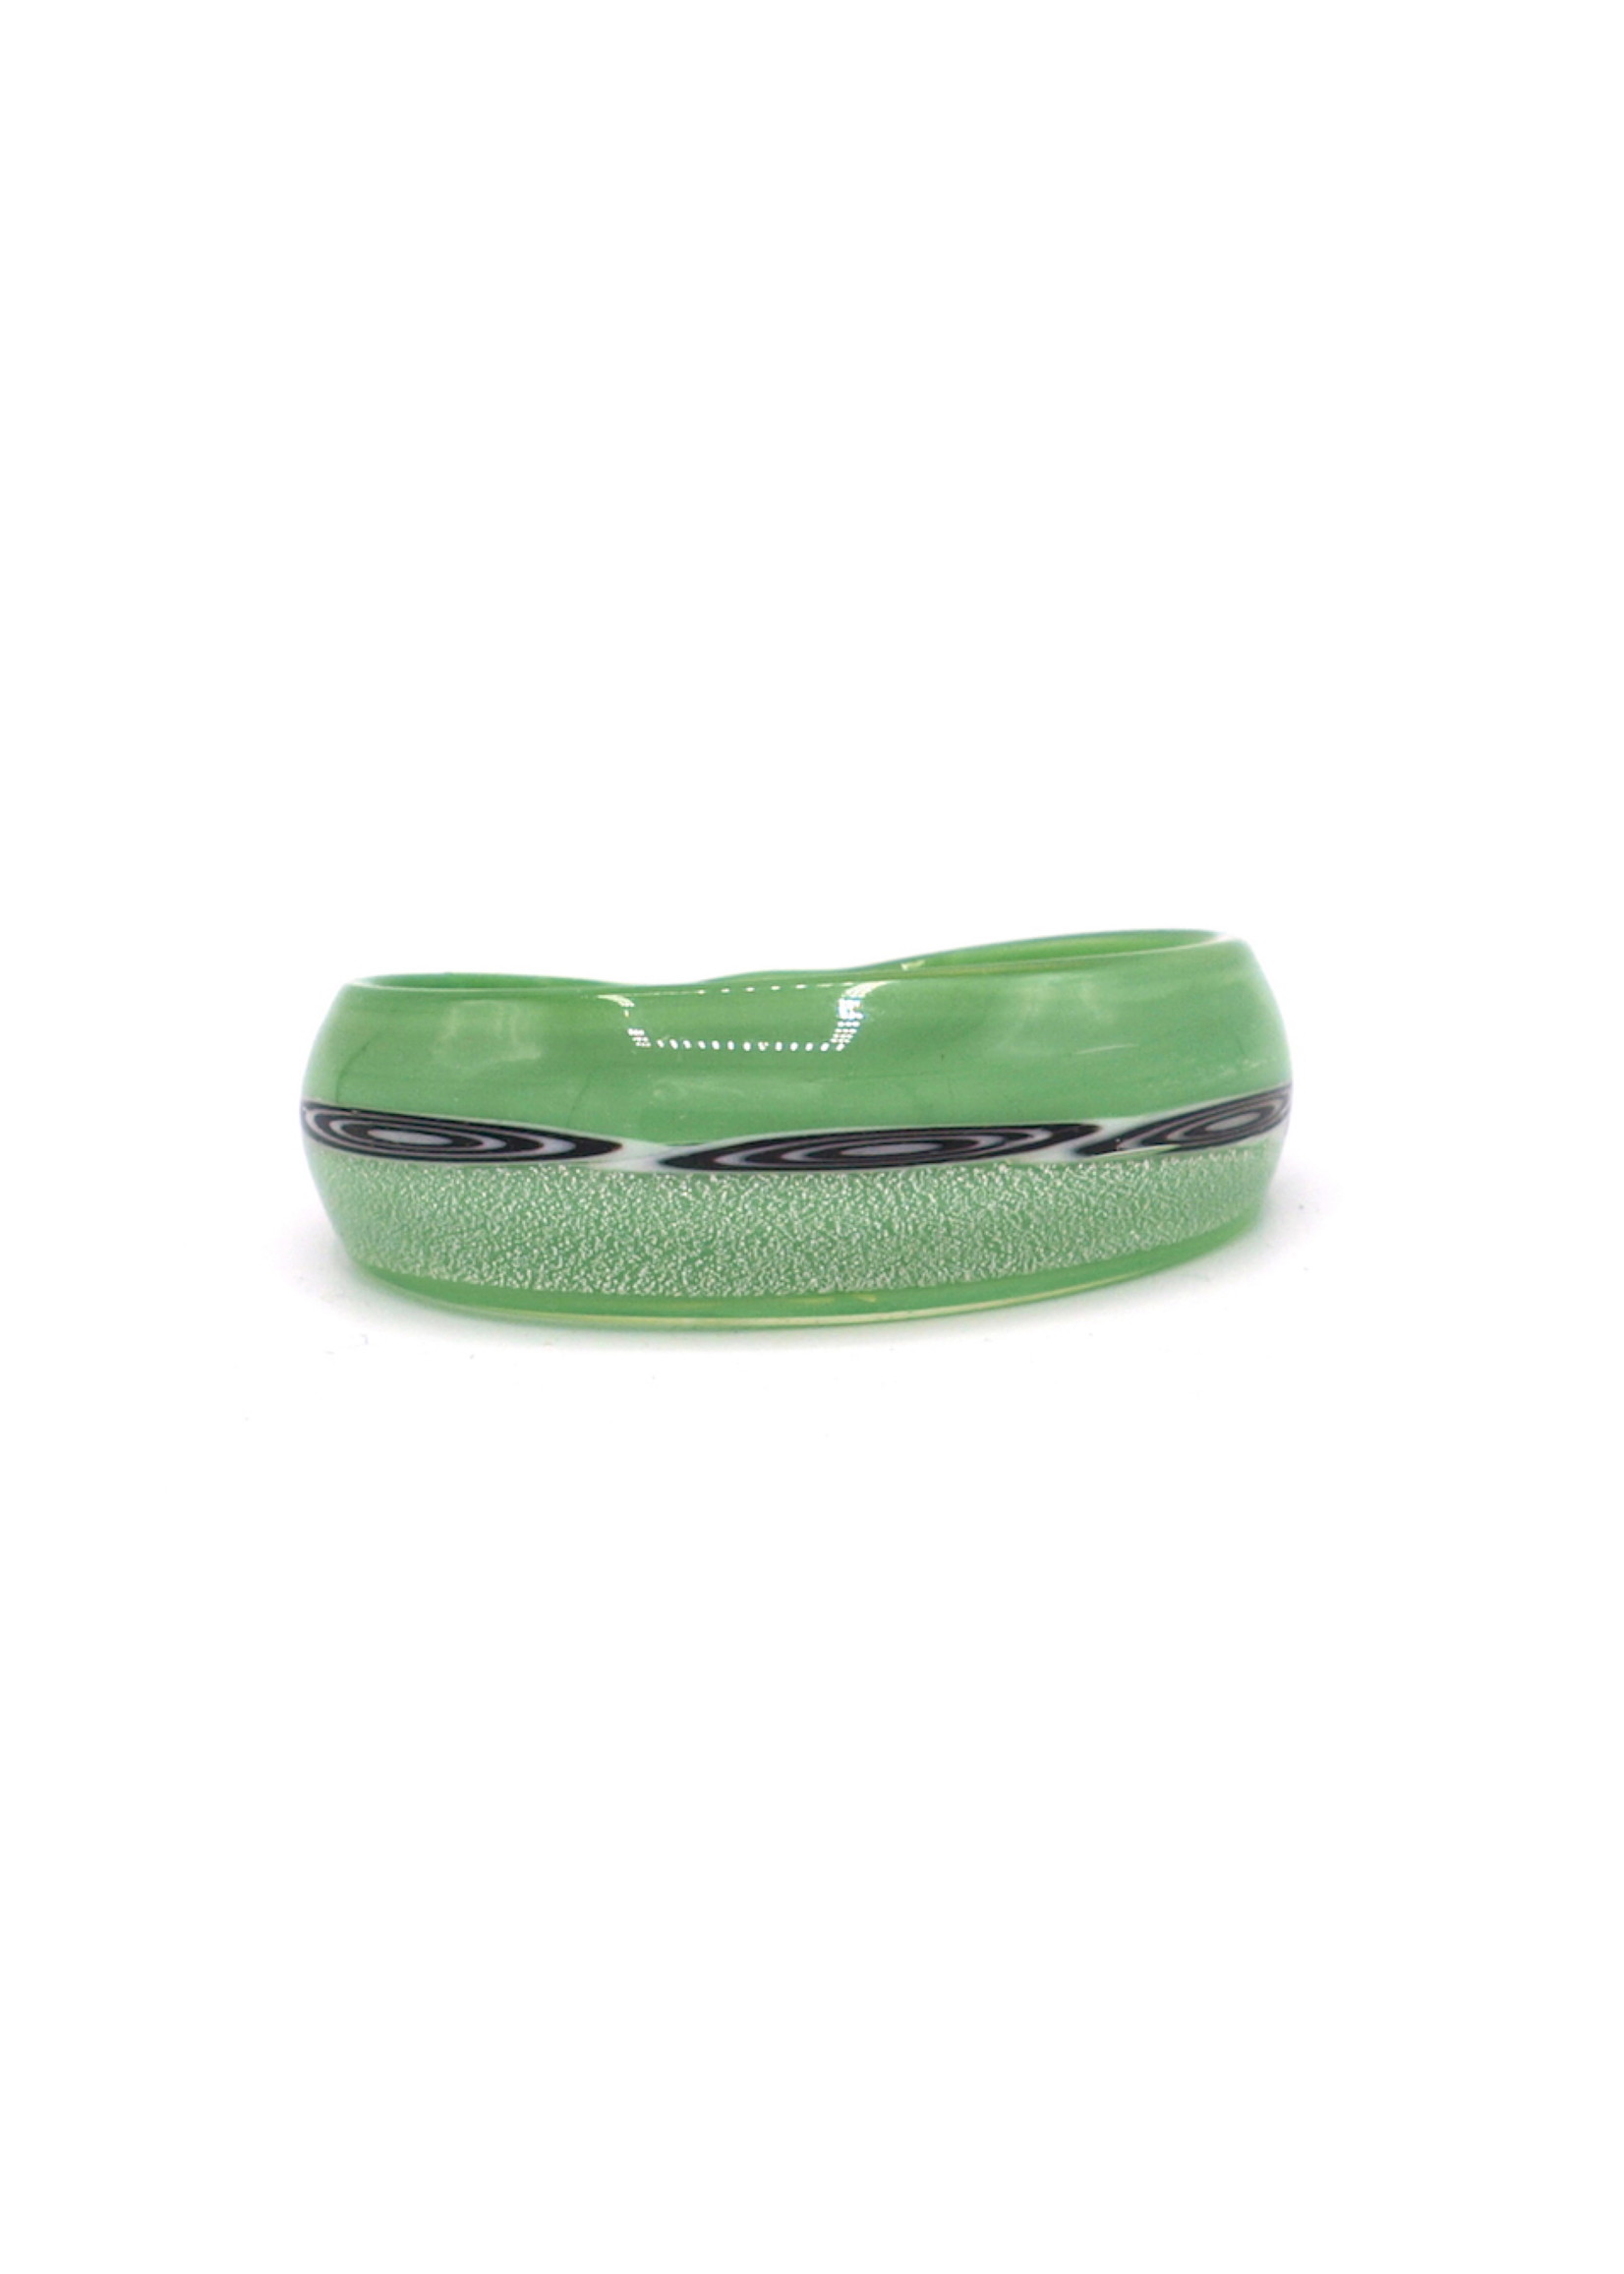 Murano Schmuck Ring in smaragd grün/schwarz